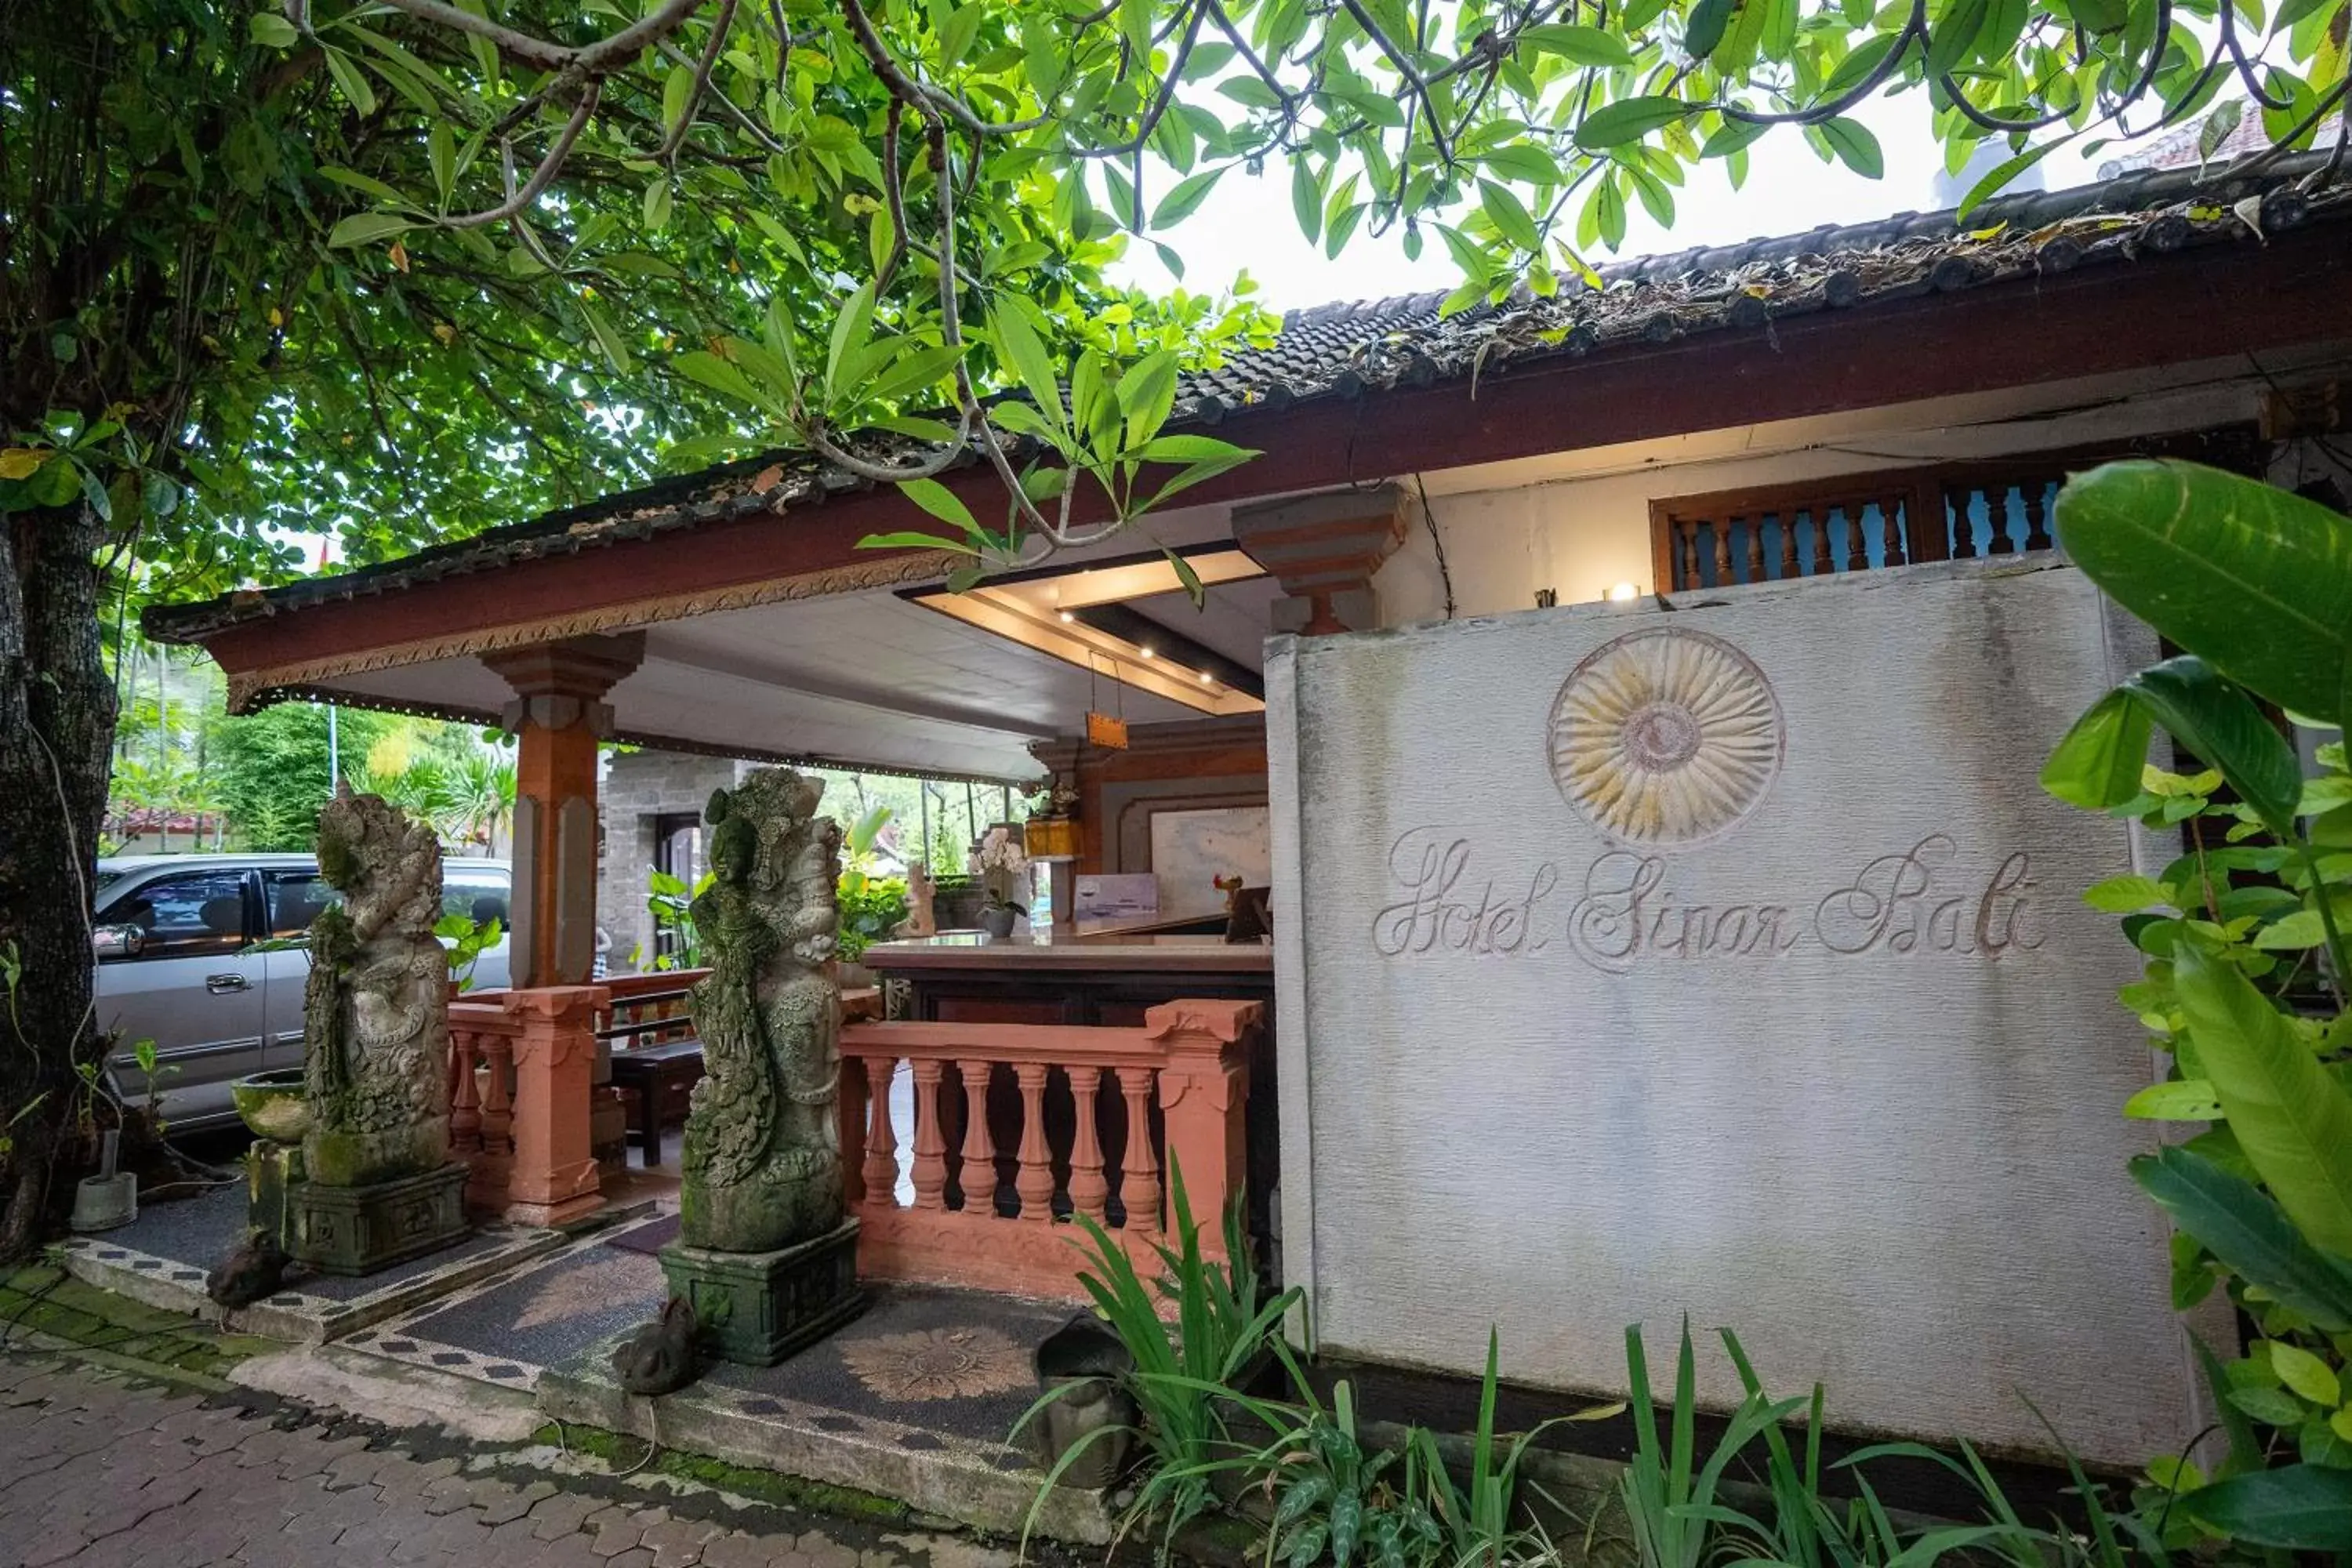 Property building in Sinar Bali Hotel